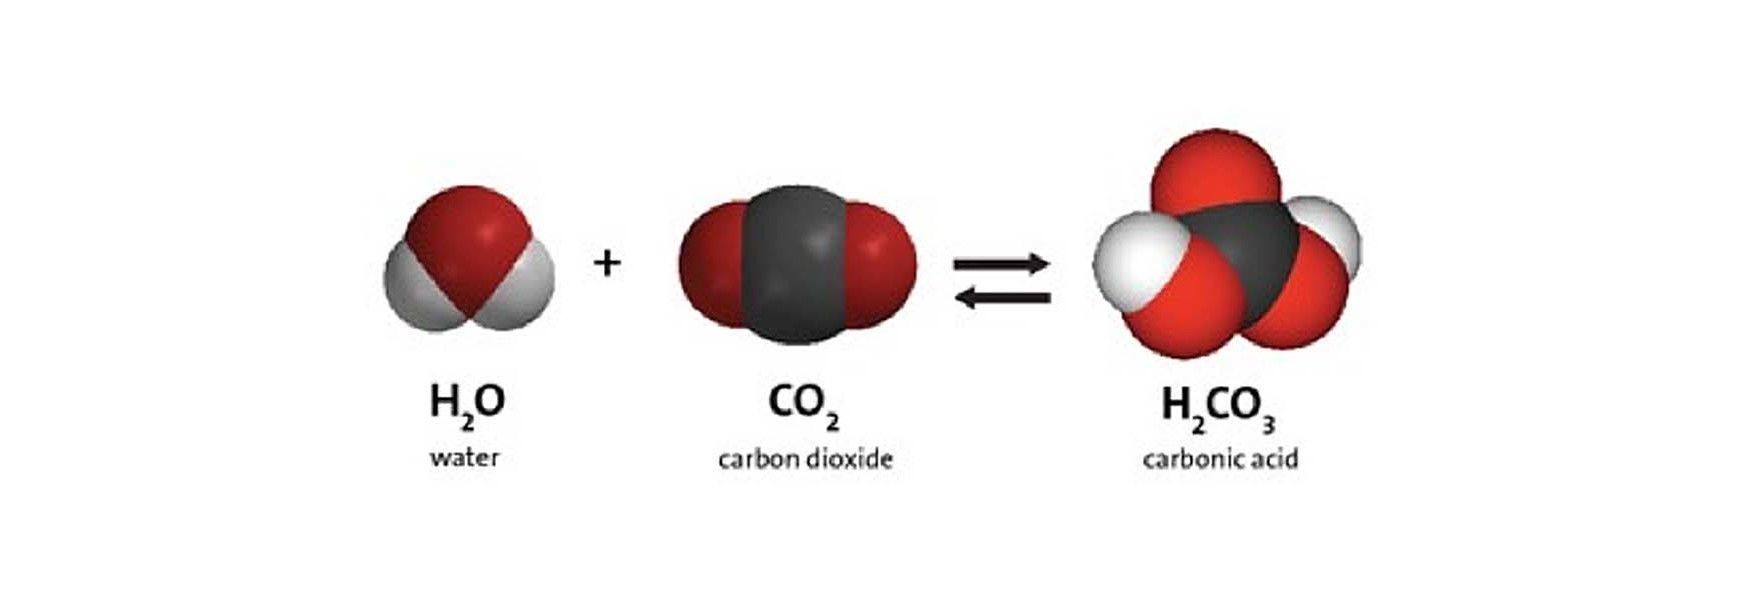 Carbonic acid formation